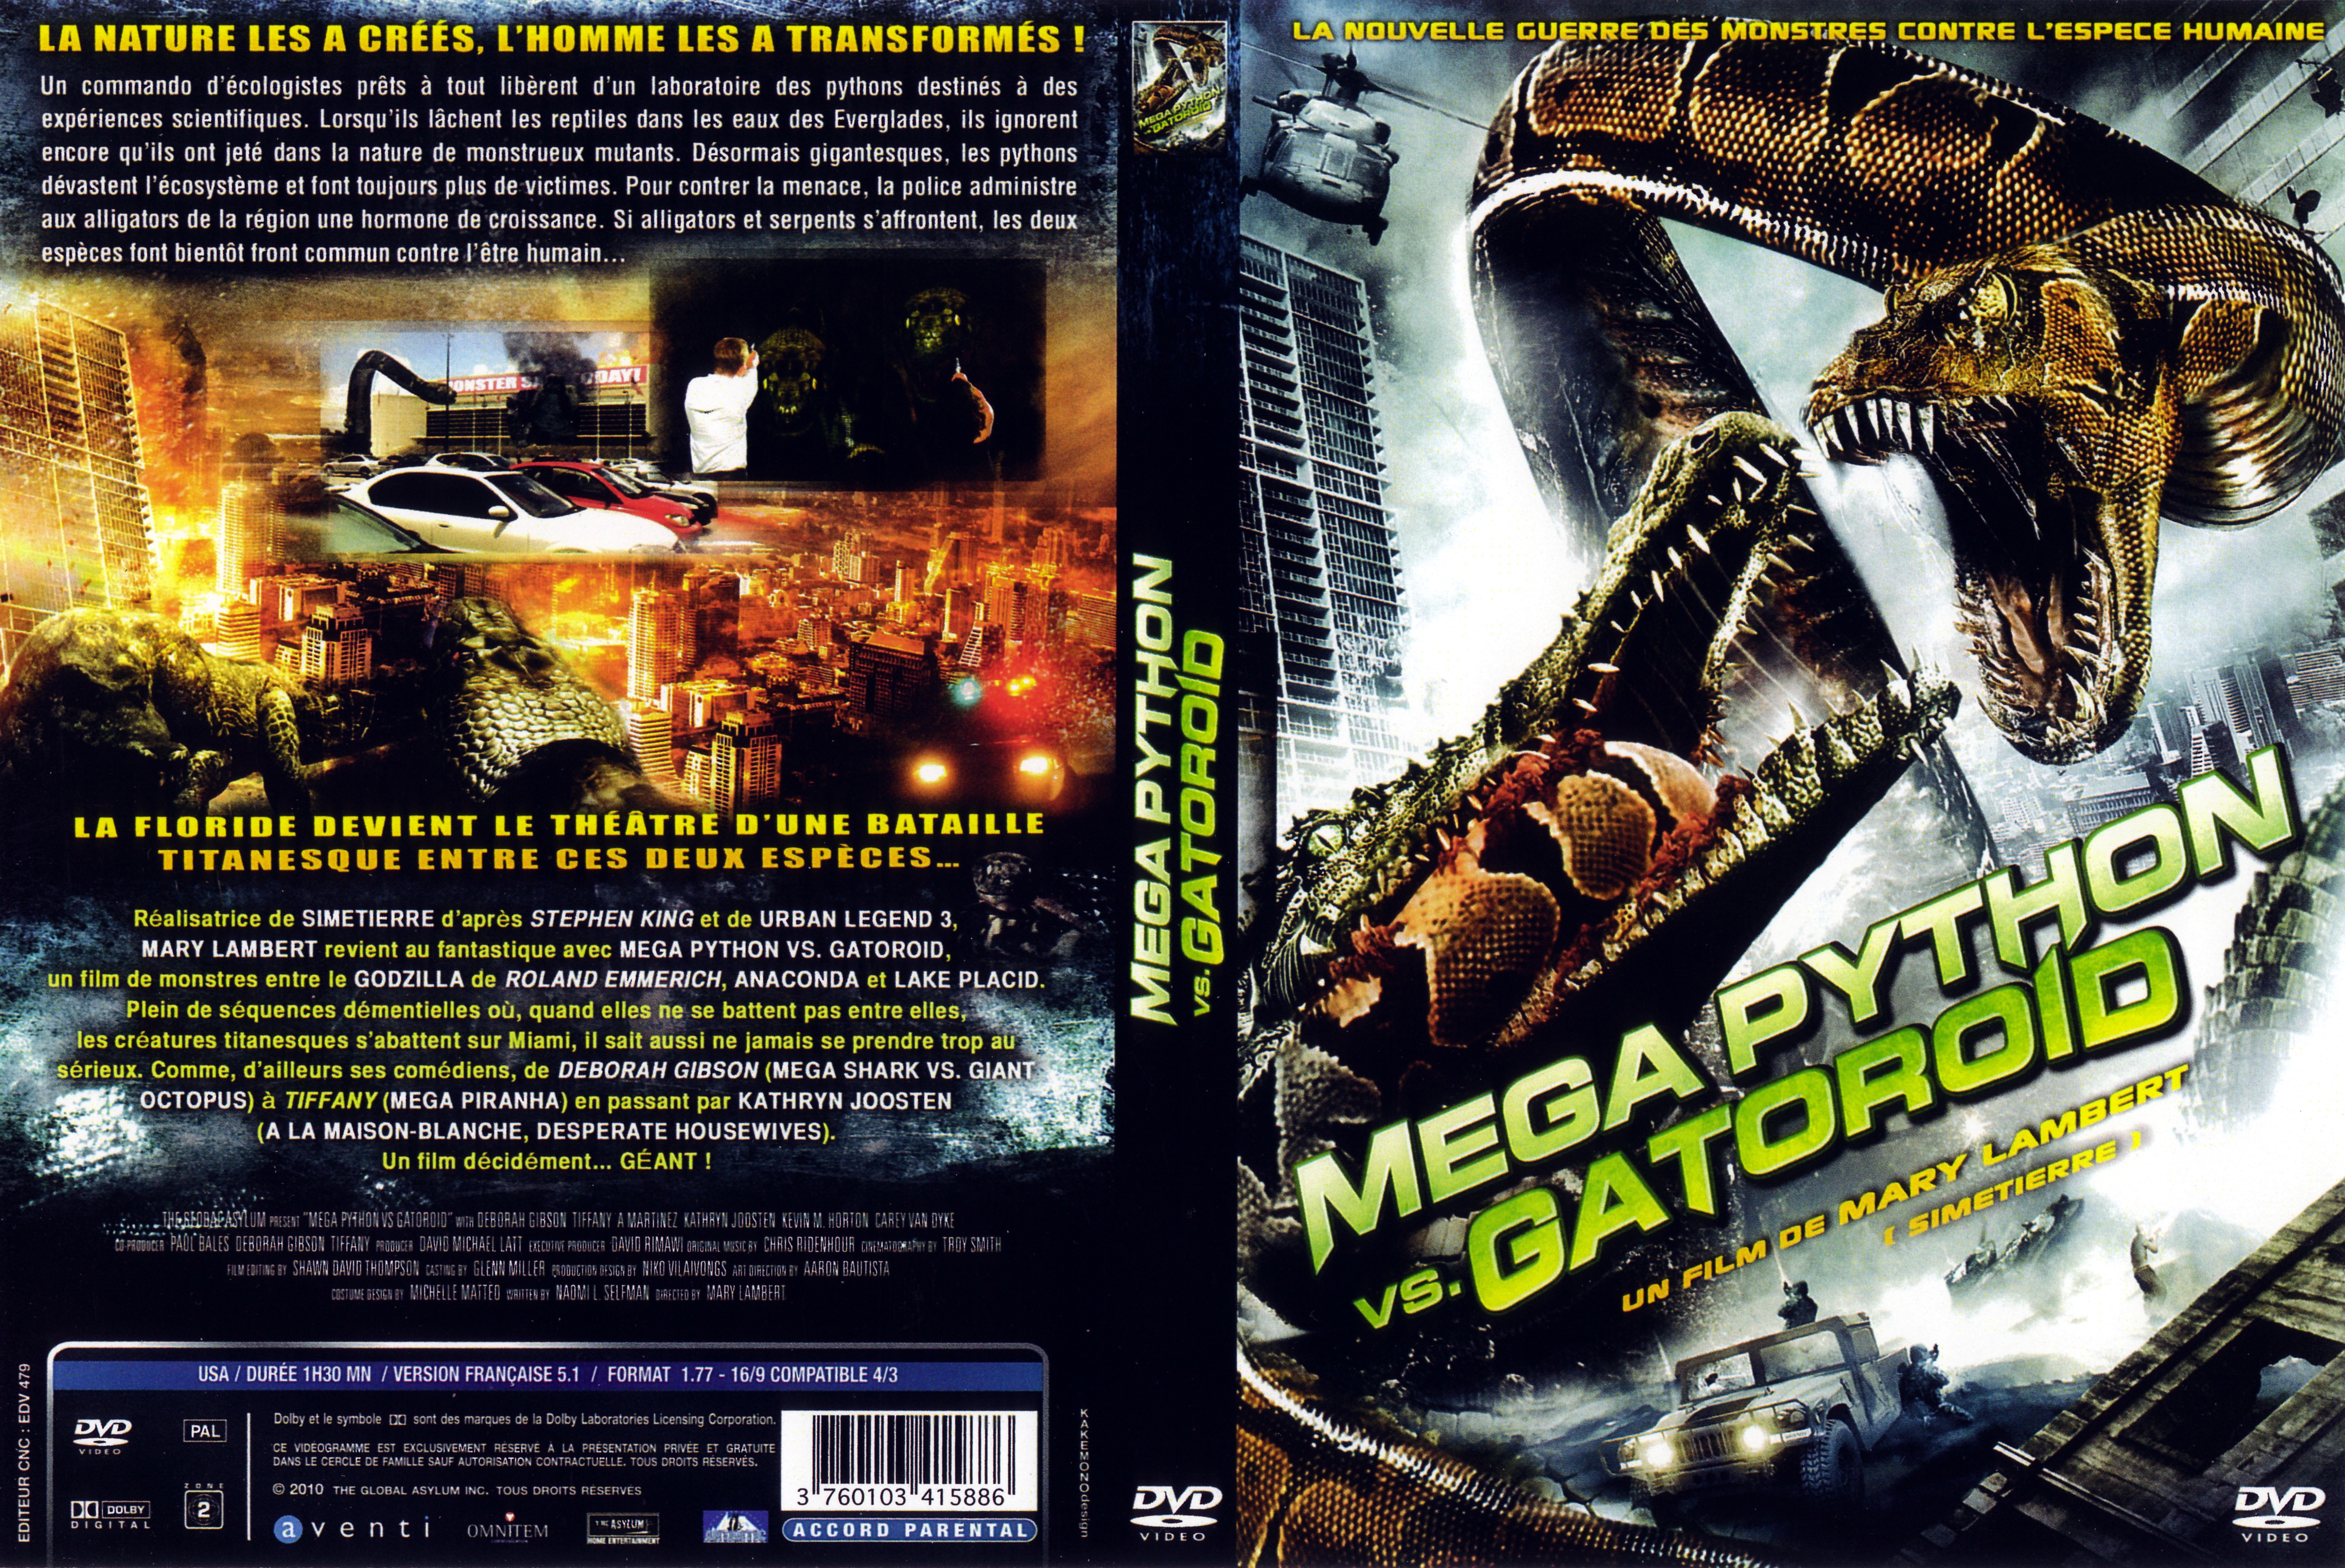 Jaquette DVD Mega Python VS Gatoroid